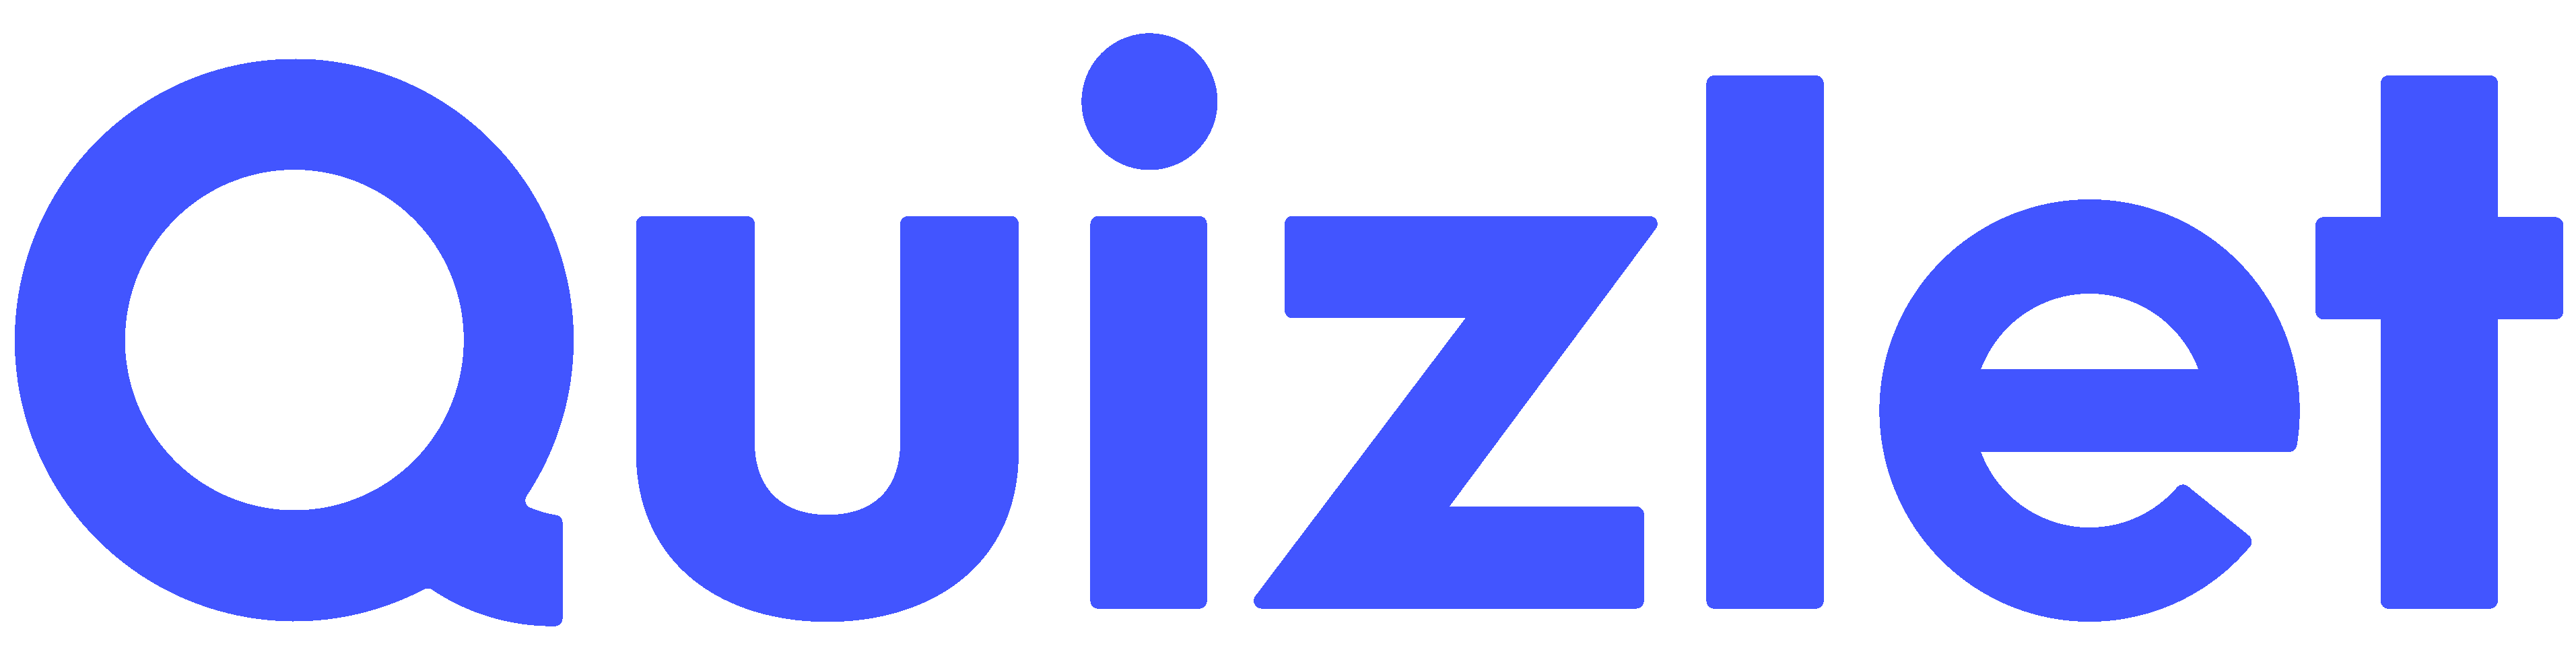 quizlet-logo (1) (1).png